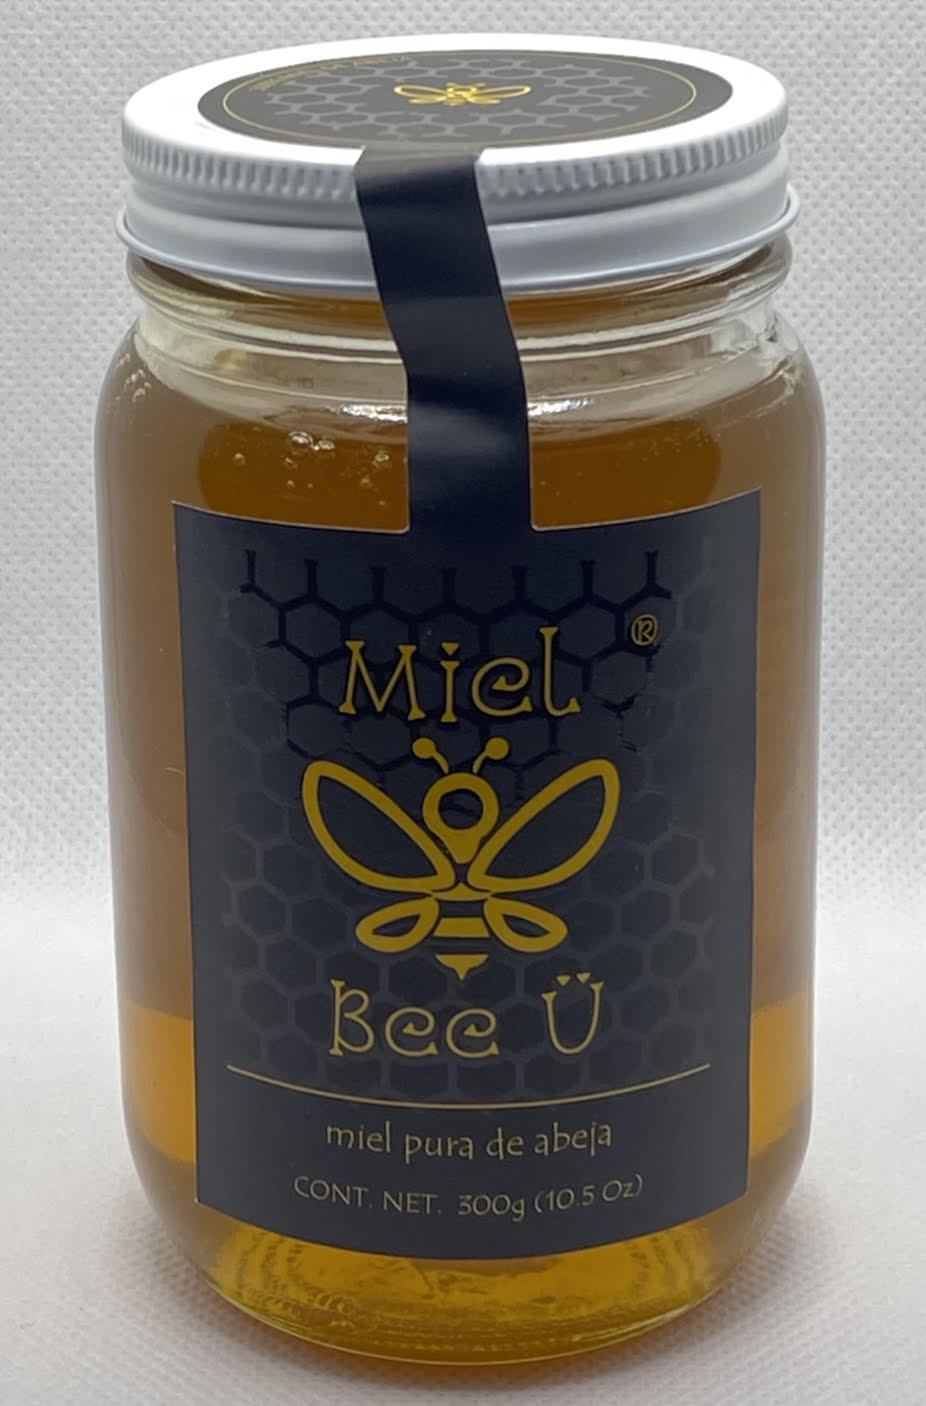 Miel 100% pura de abeja multiflora Bee Ü – Vepaden